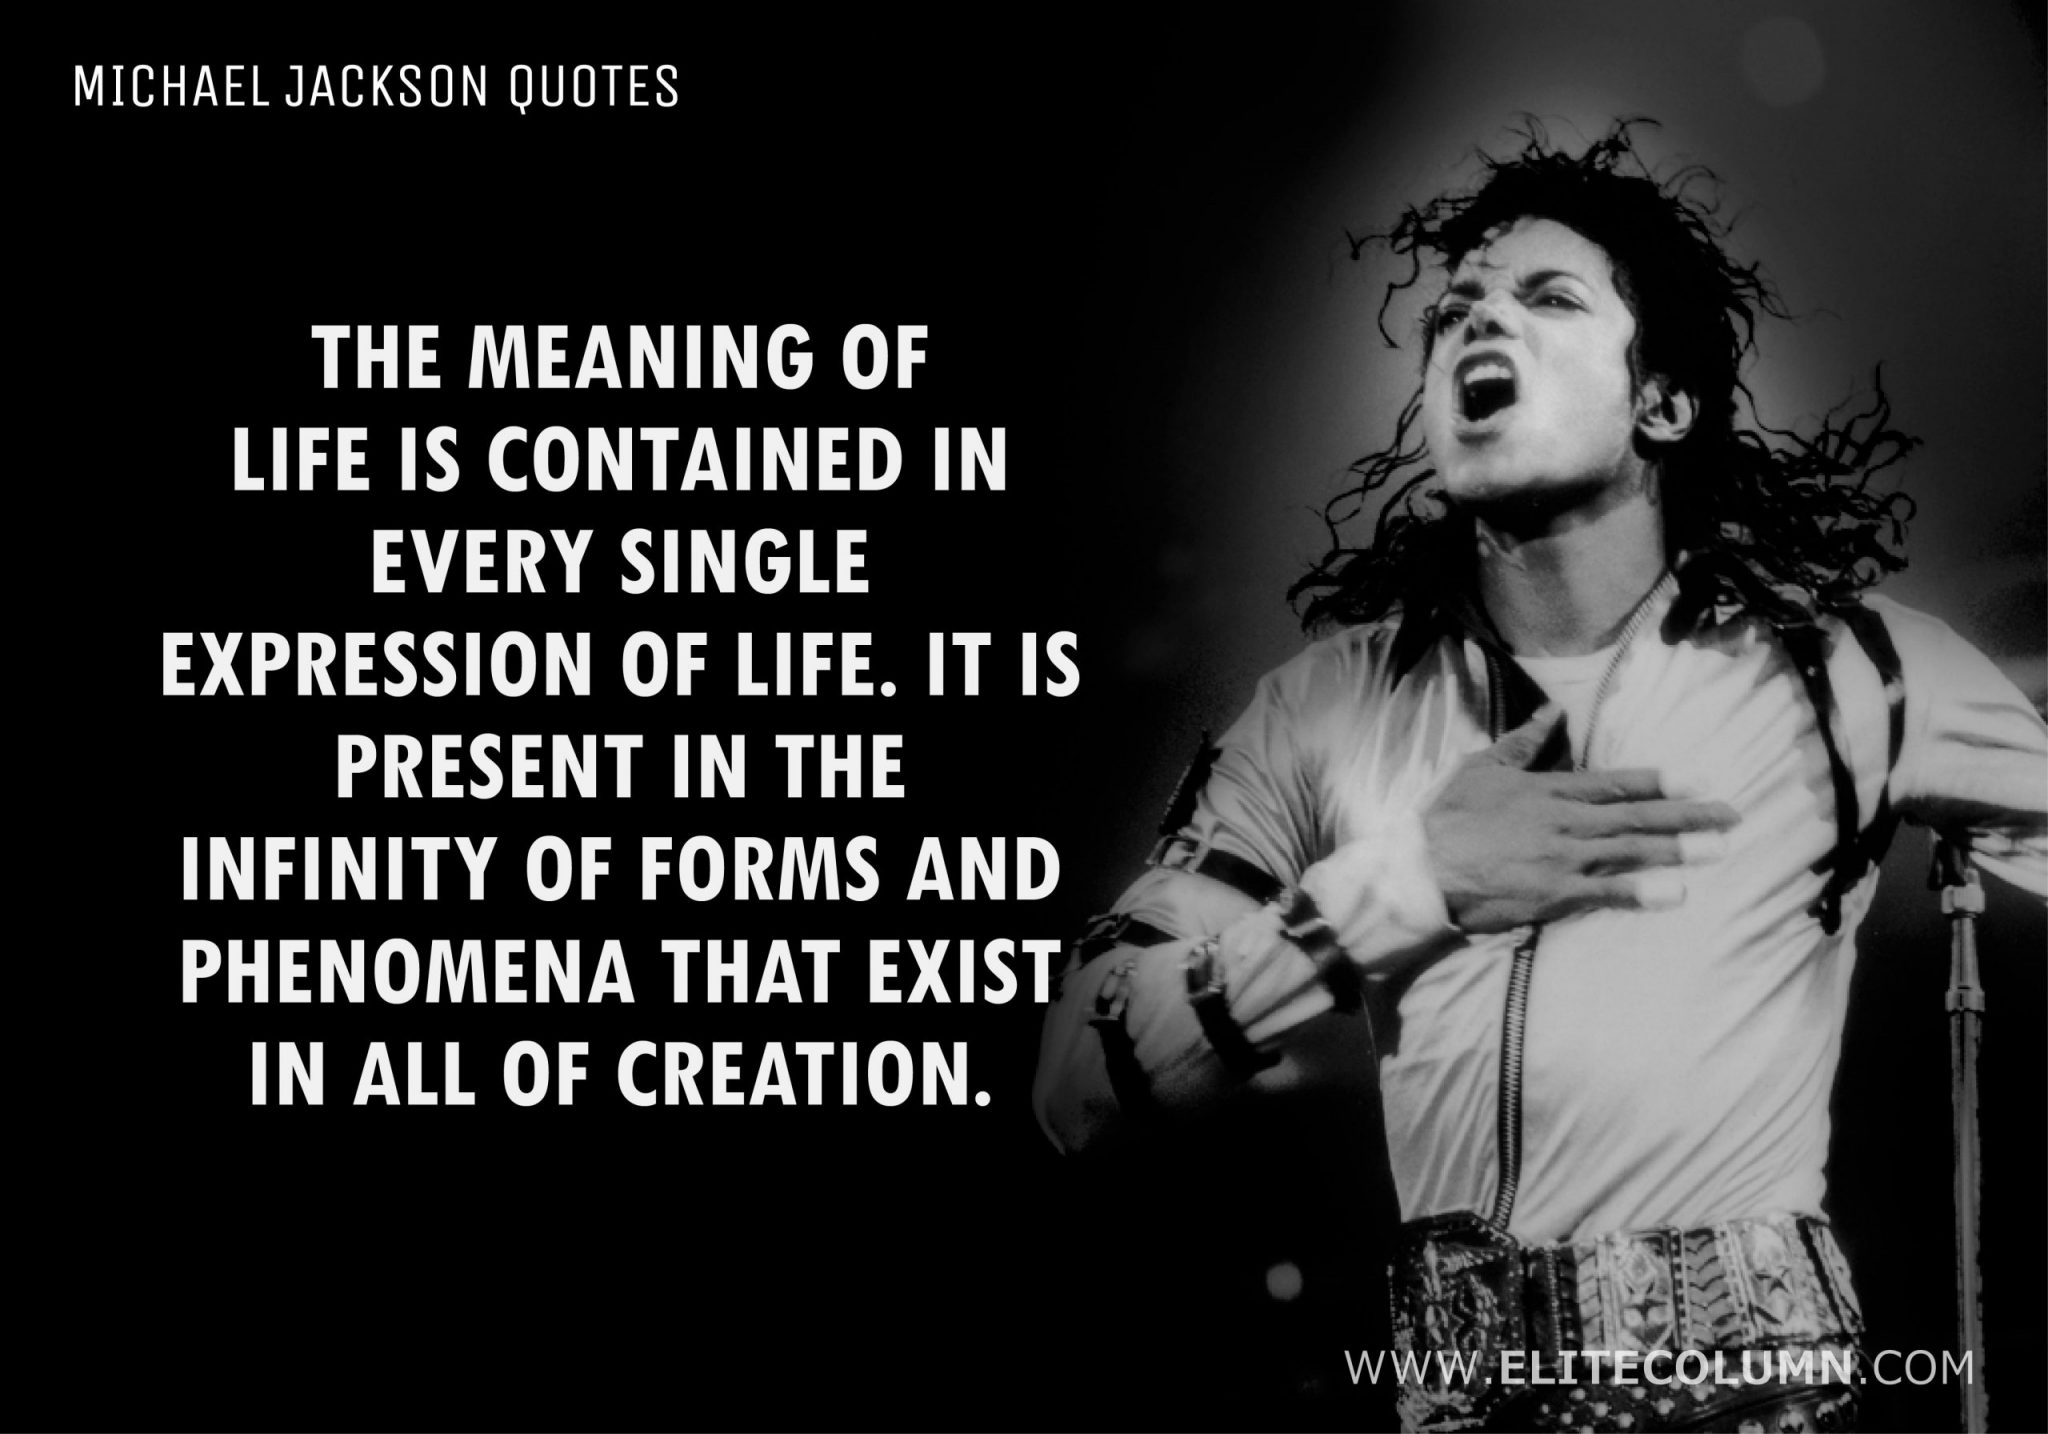 Michael Jackson Quotes (5)